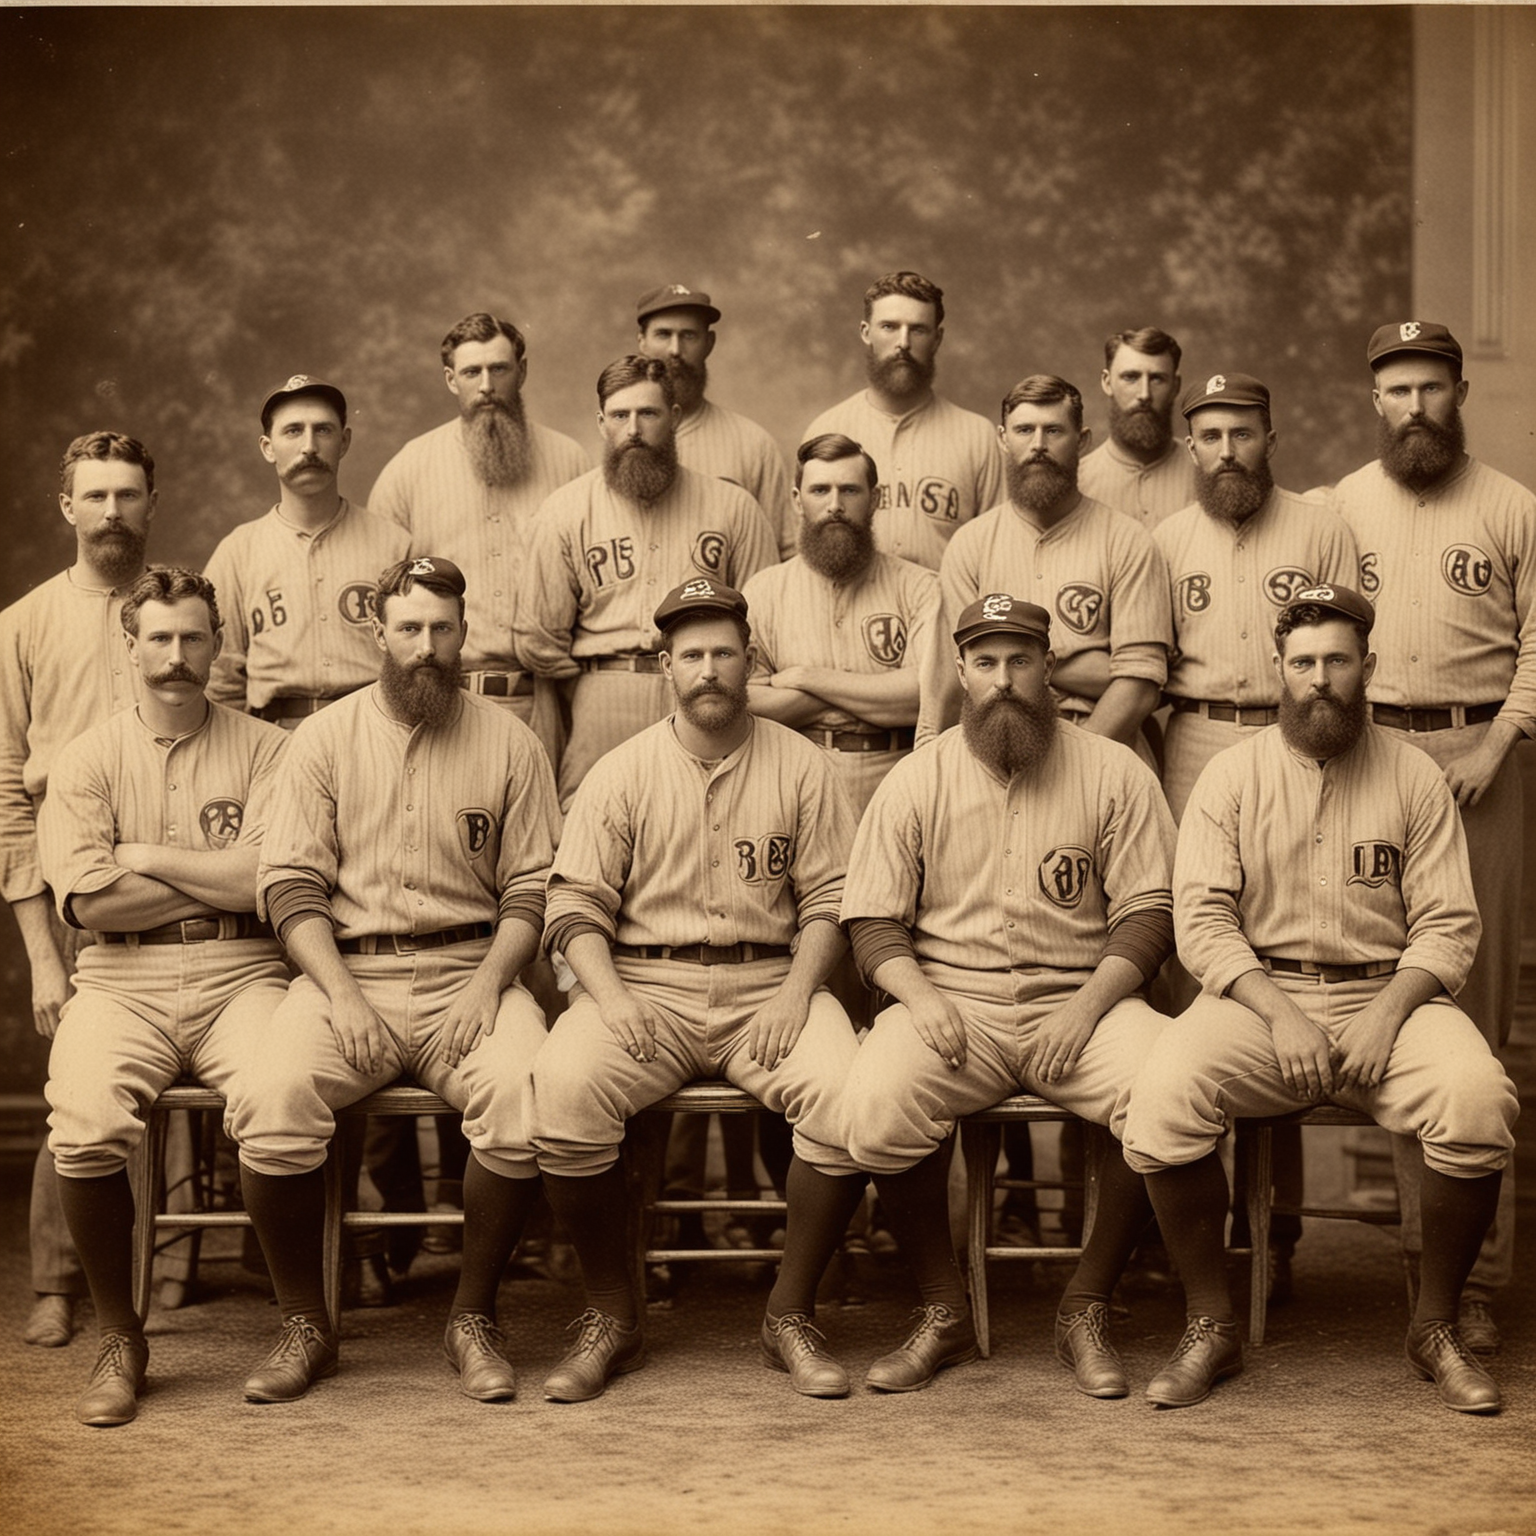 Create a vintage photo of an 1884 professional baseball team



